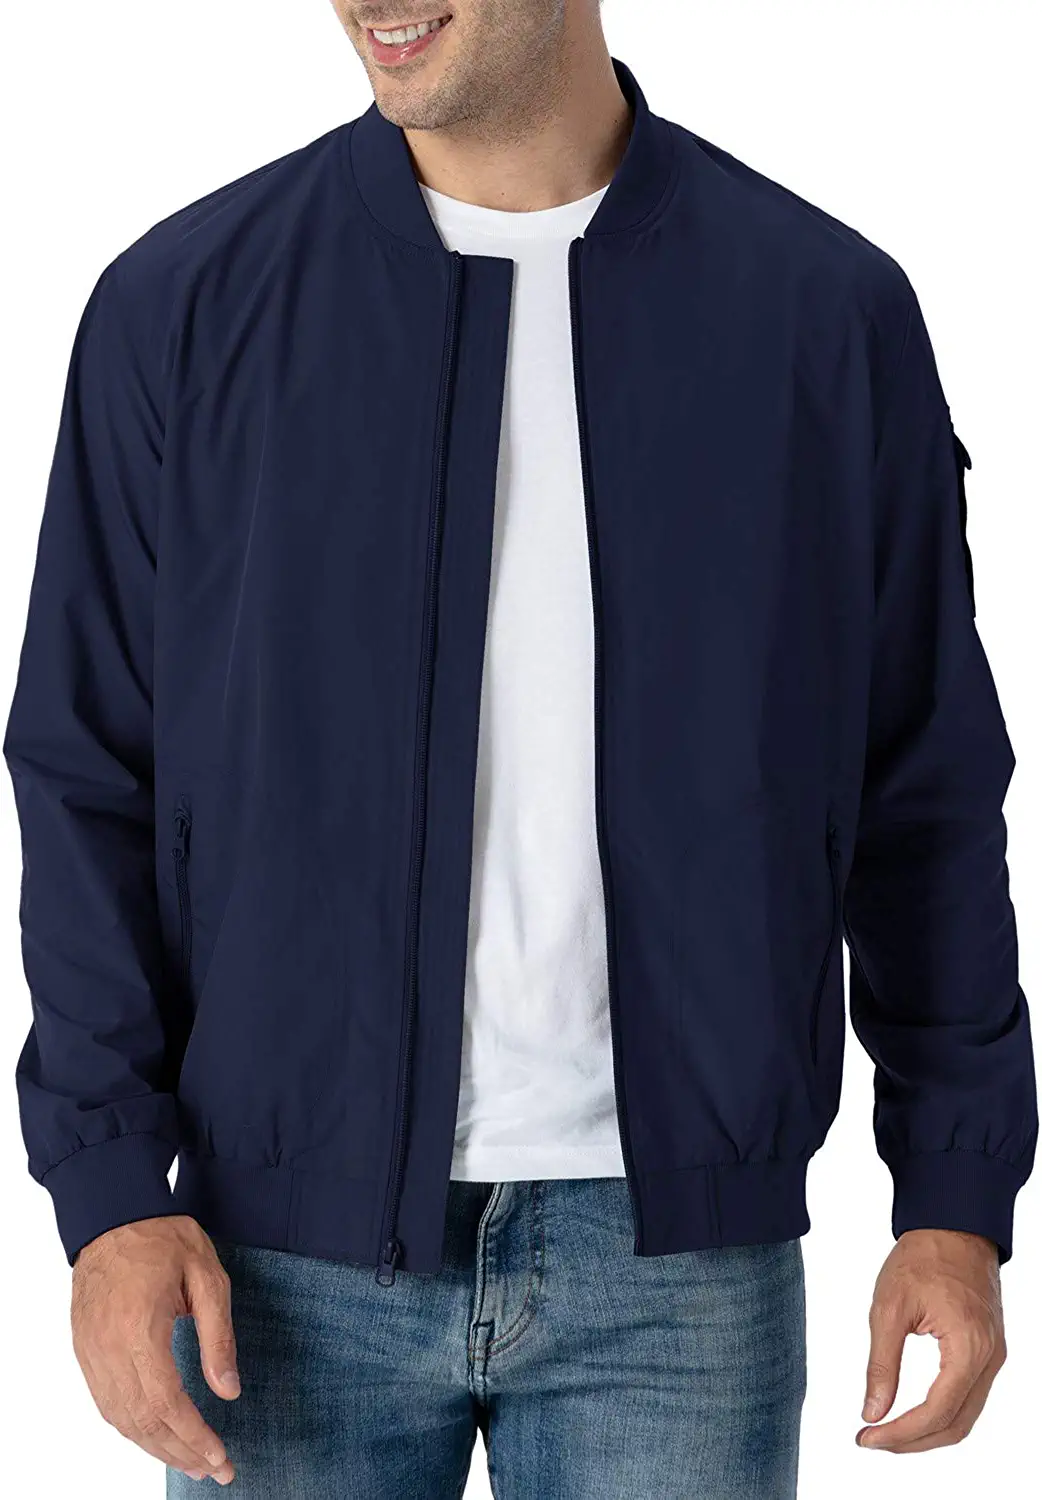 Leey-world Jackets for Men Fashion Men's Lightweight Bomber Jacket Causal Varsity Flight Windbreaker Track Jacket Green,3XL, Adult Unisex, Blue